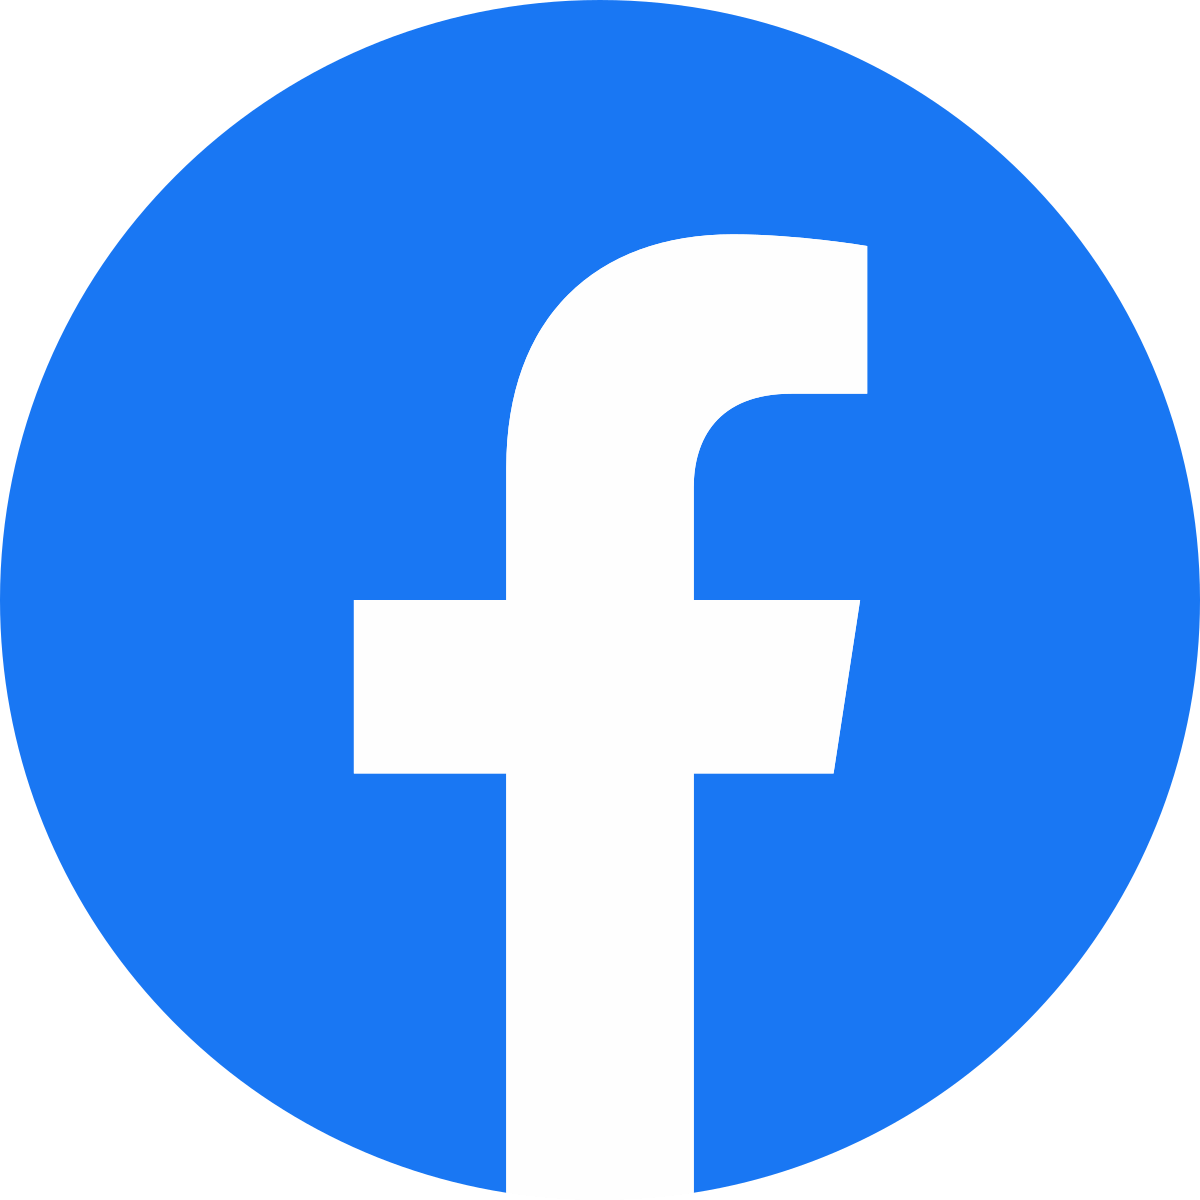 0012001200760-facebook-logo.png